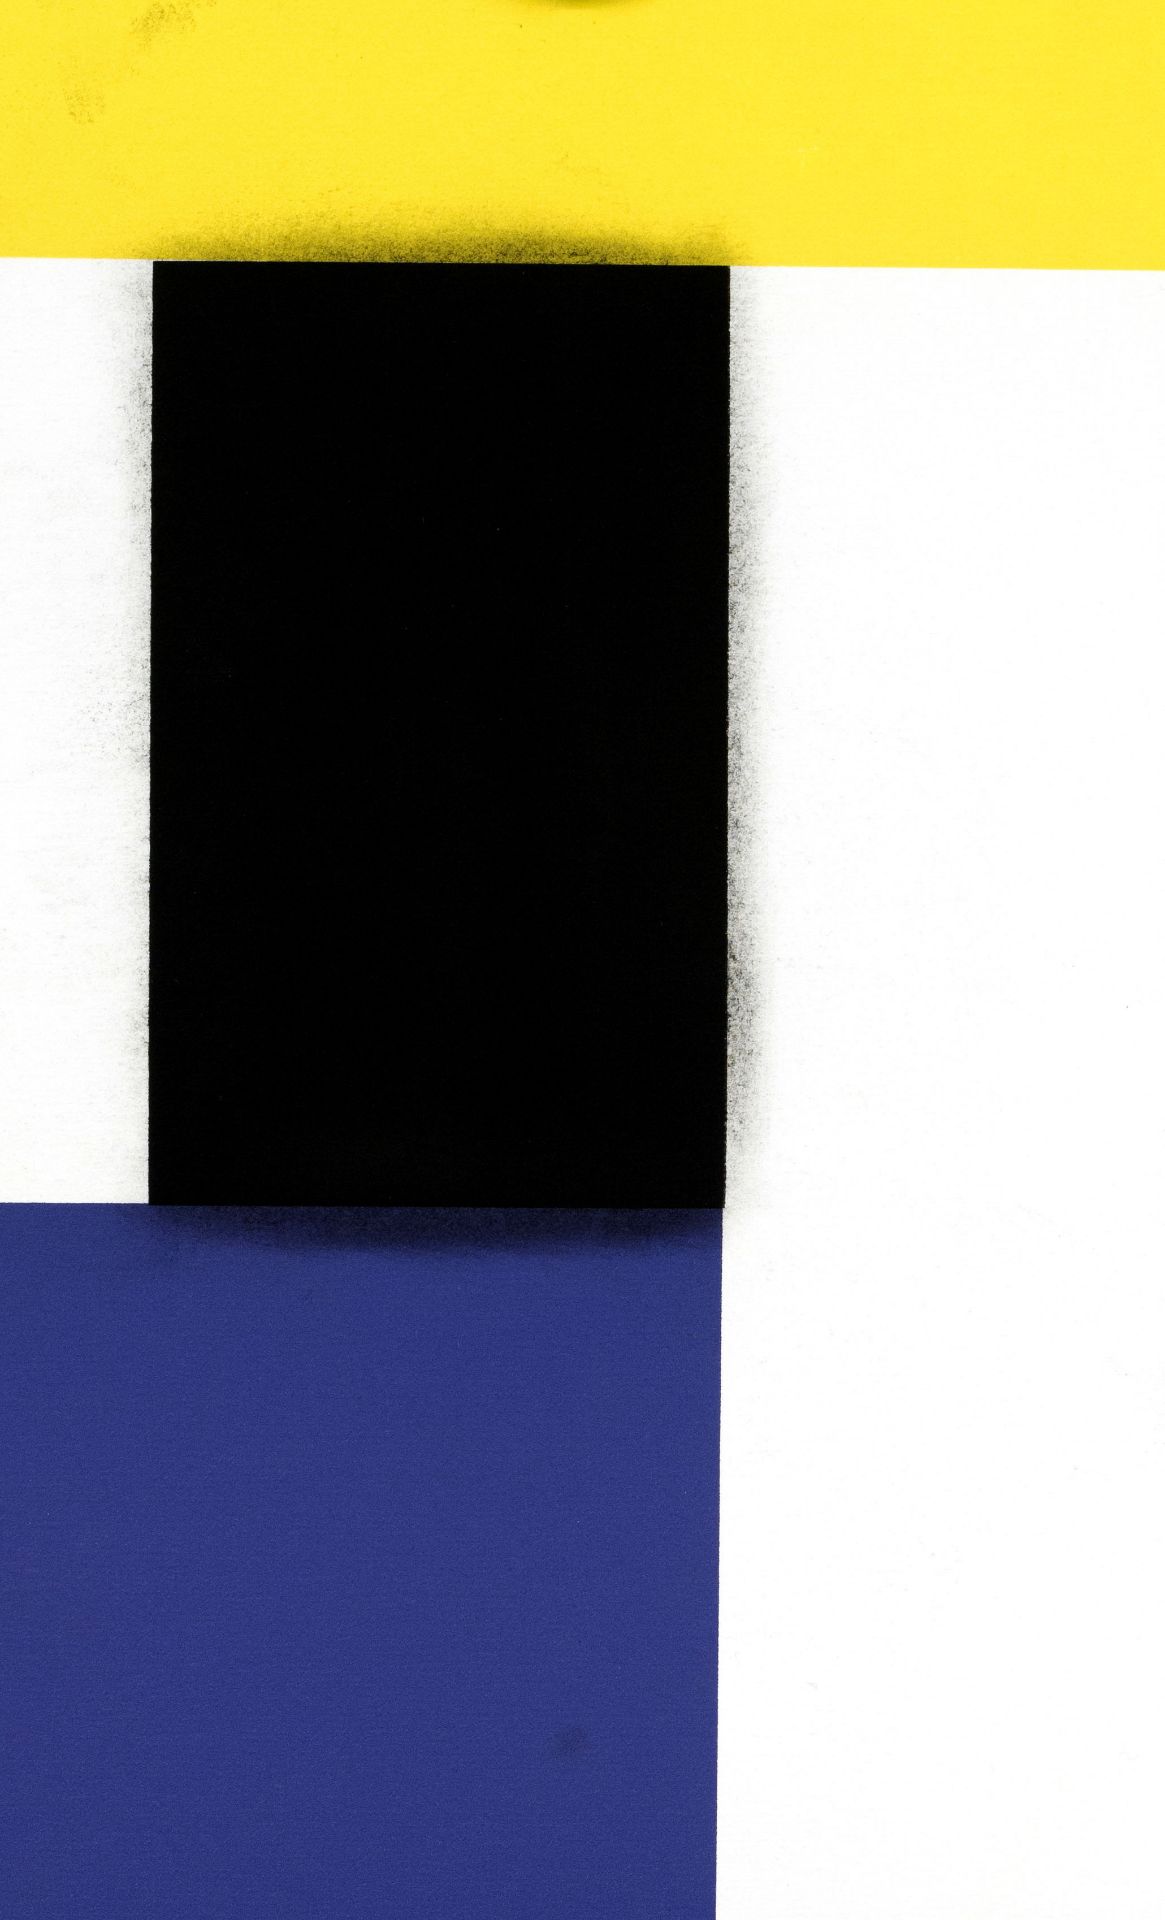 Lienhard von Monkiewitsch (*1941), Hard Edge Composition, color silkscreen on cardboard with a field